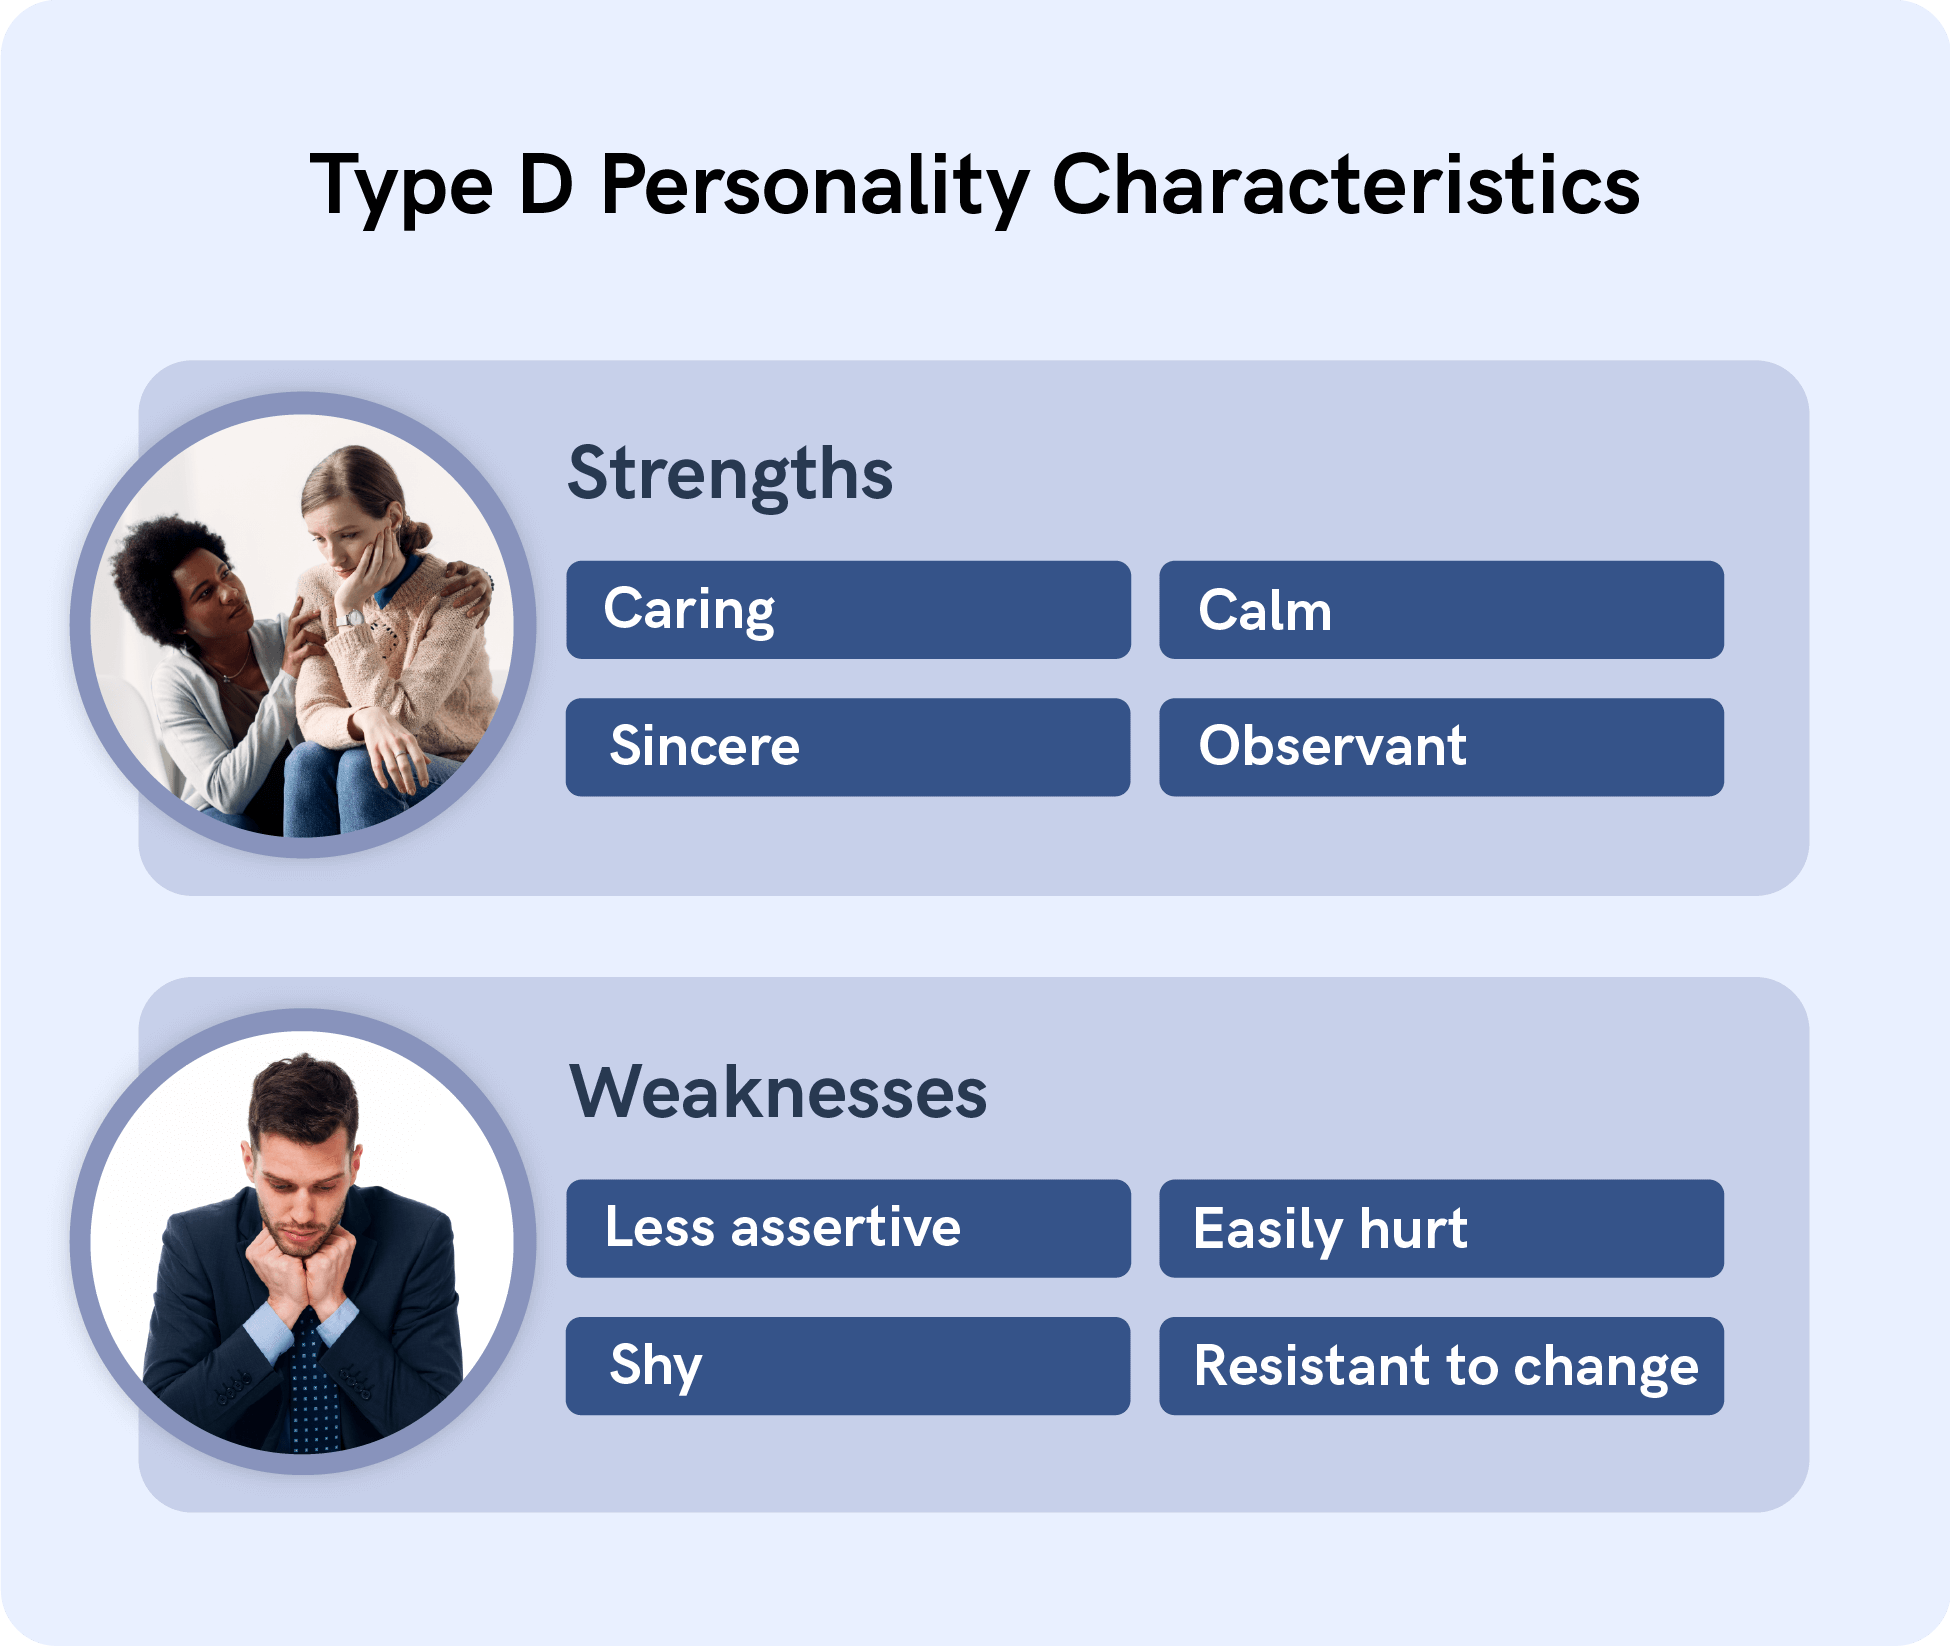 Type d personality characteristics.